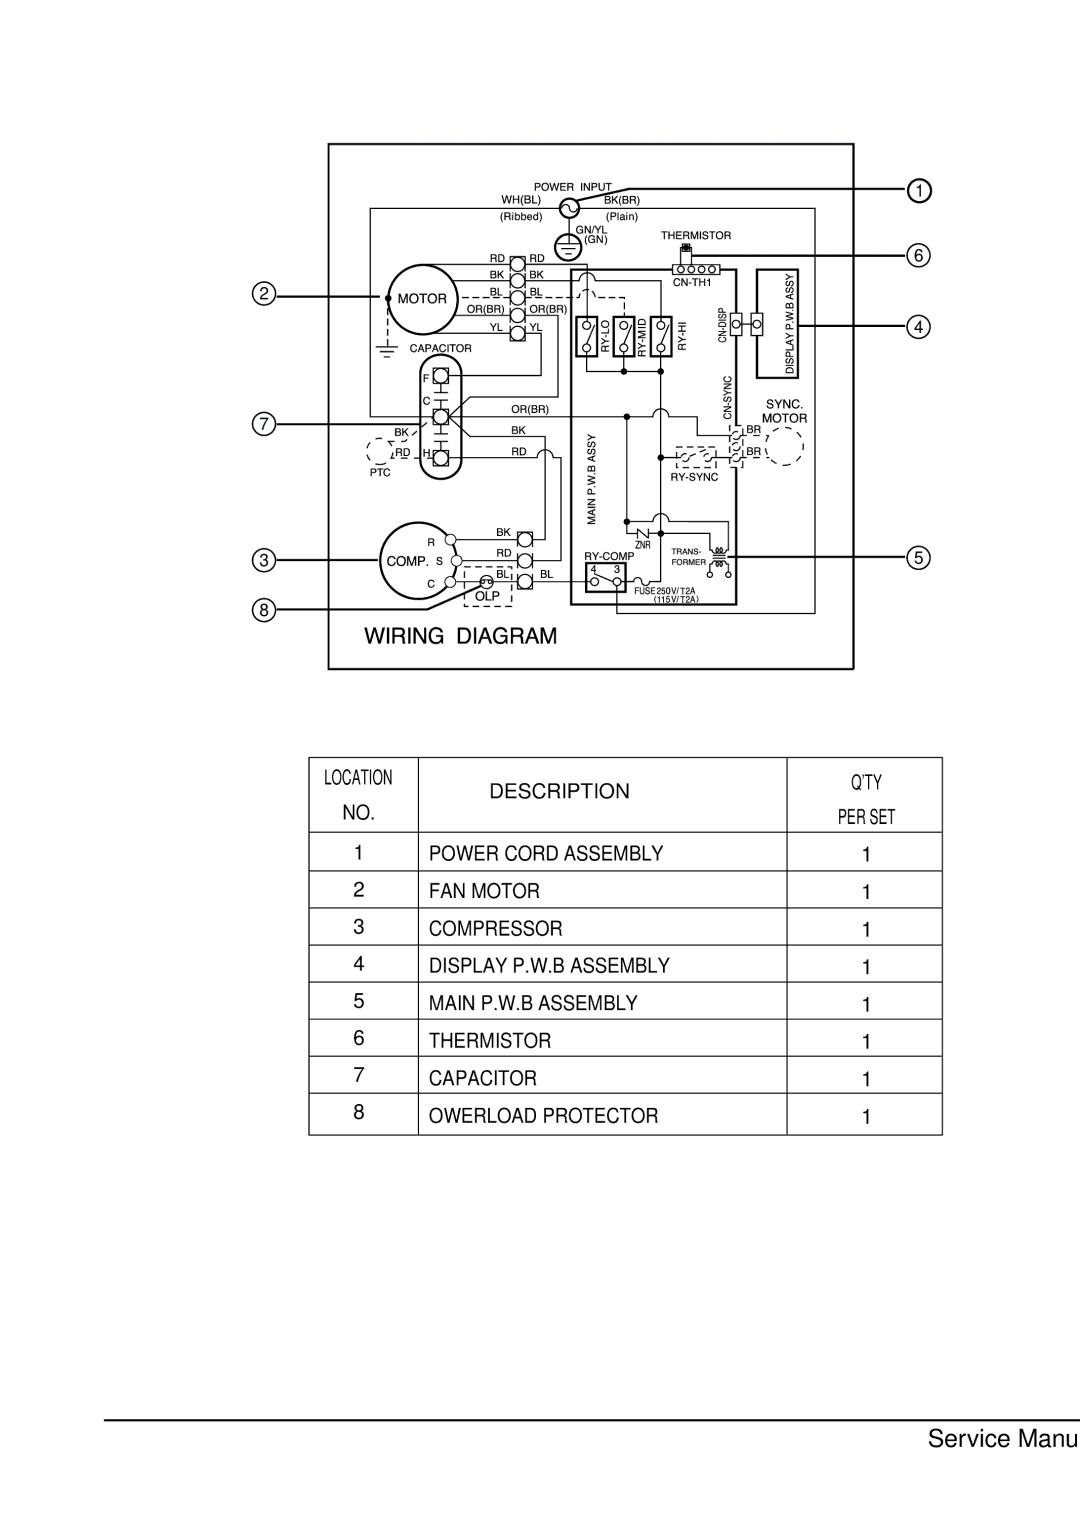 Friedrich CP08E10, CP06E10 manual Circuit Diagram, Description QTY 